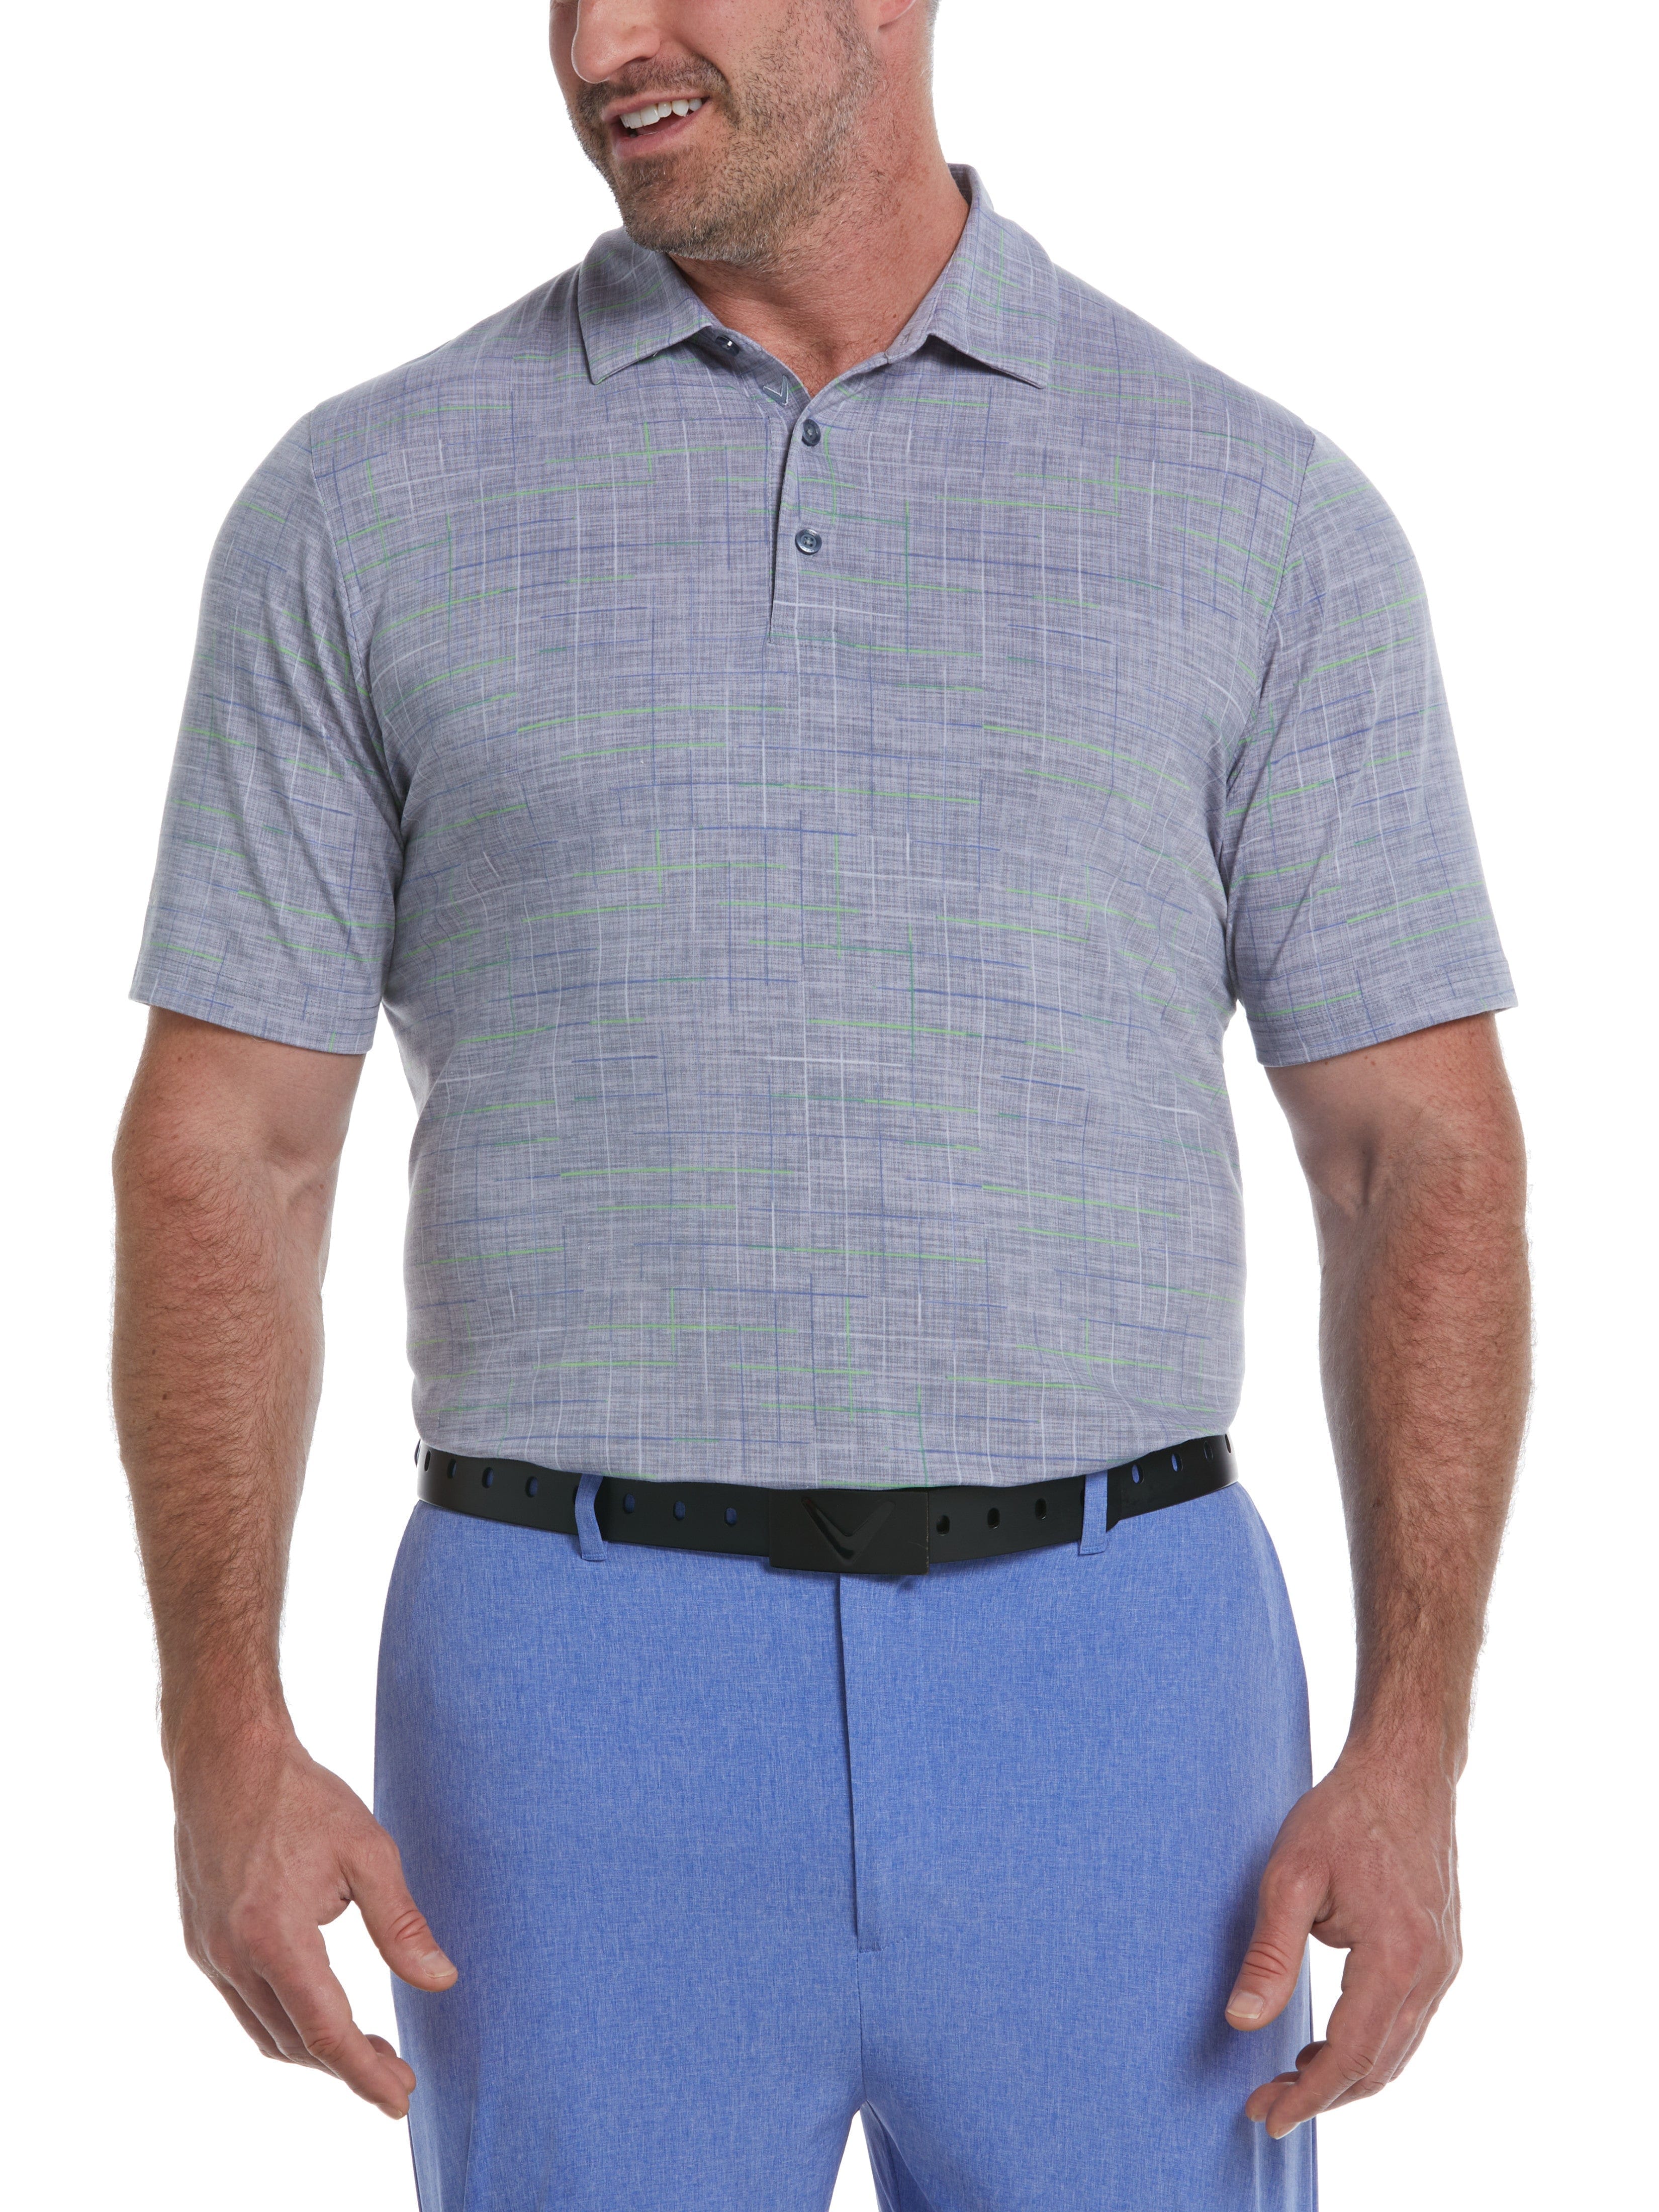 Callaway Apparel Mens Big & Tall Sun-Worn Texture Print Plaid Golf Polo Shirt, Size 2X, Flint Stone Gray, Polyester/Cotton/Elastane